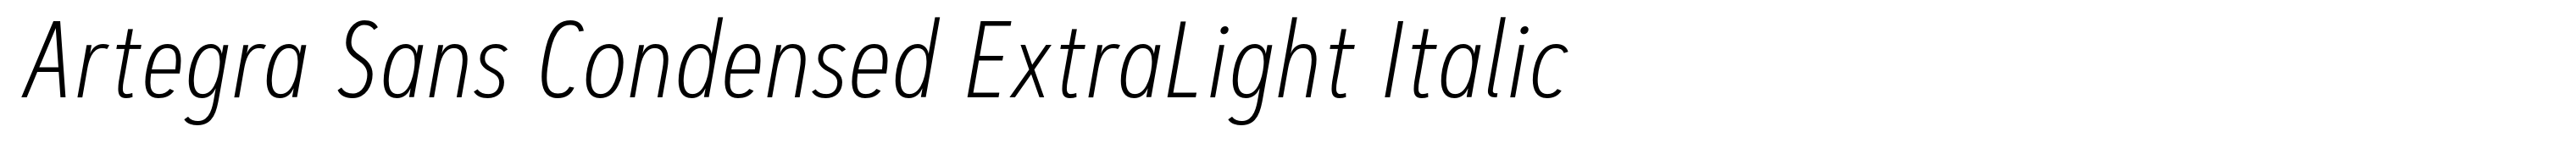 Artegra Sans Condensed ExtraLight Italic